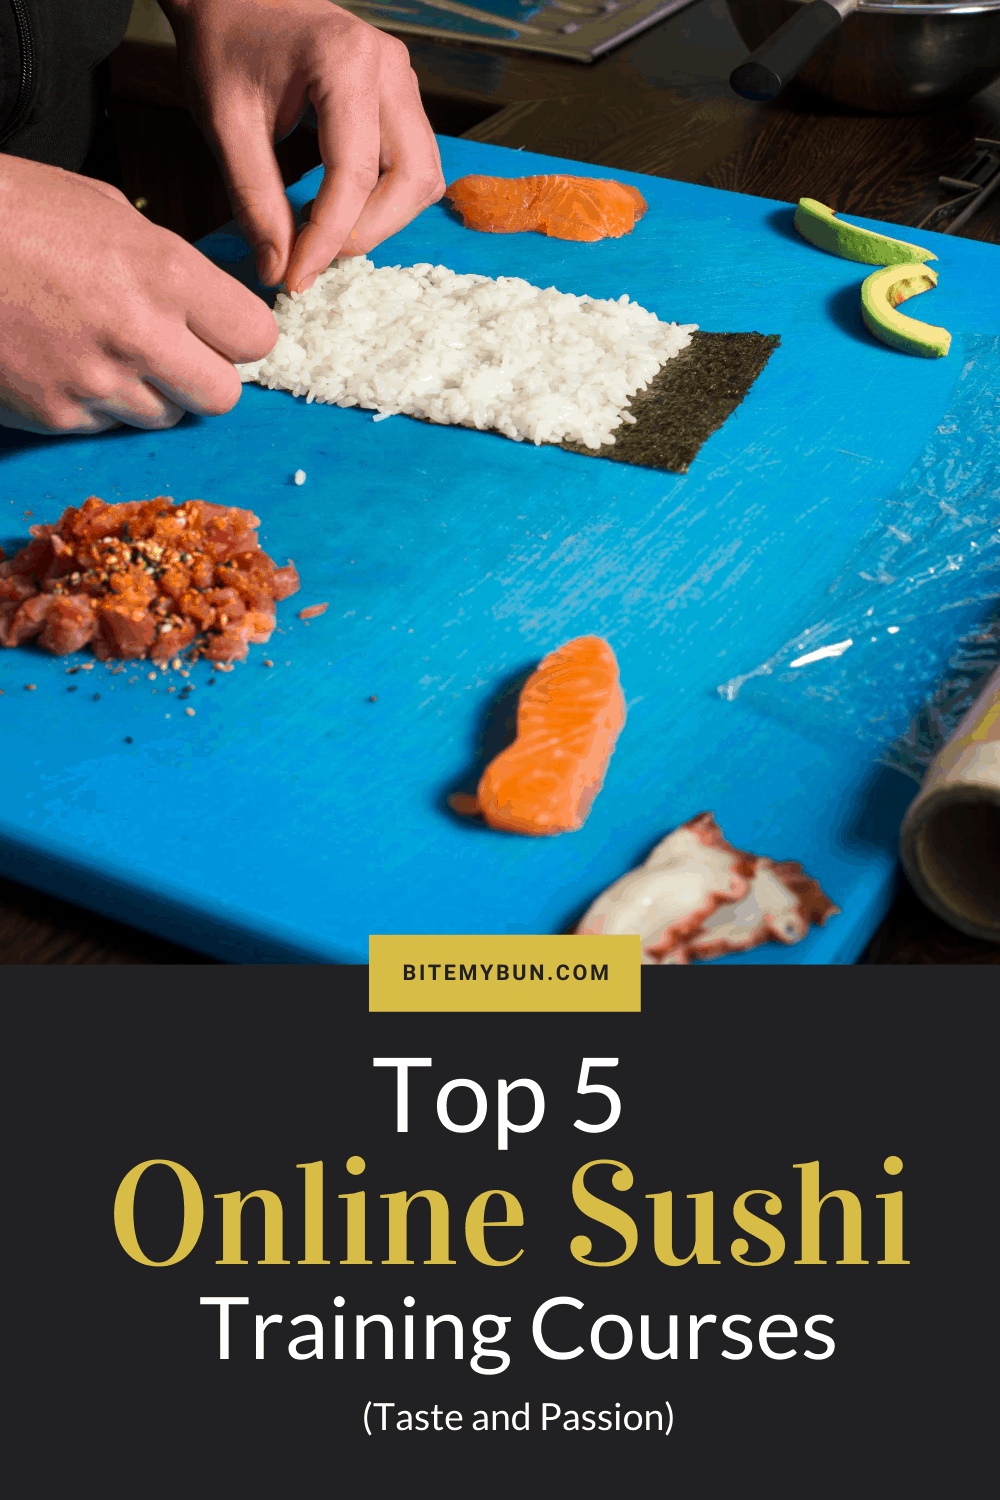 Cursos online de sushi